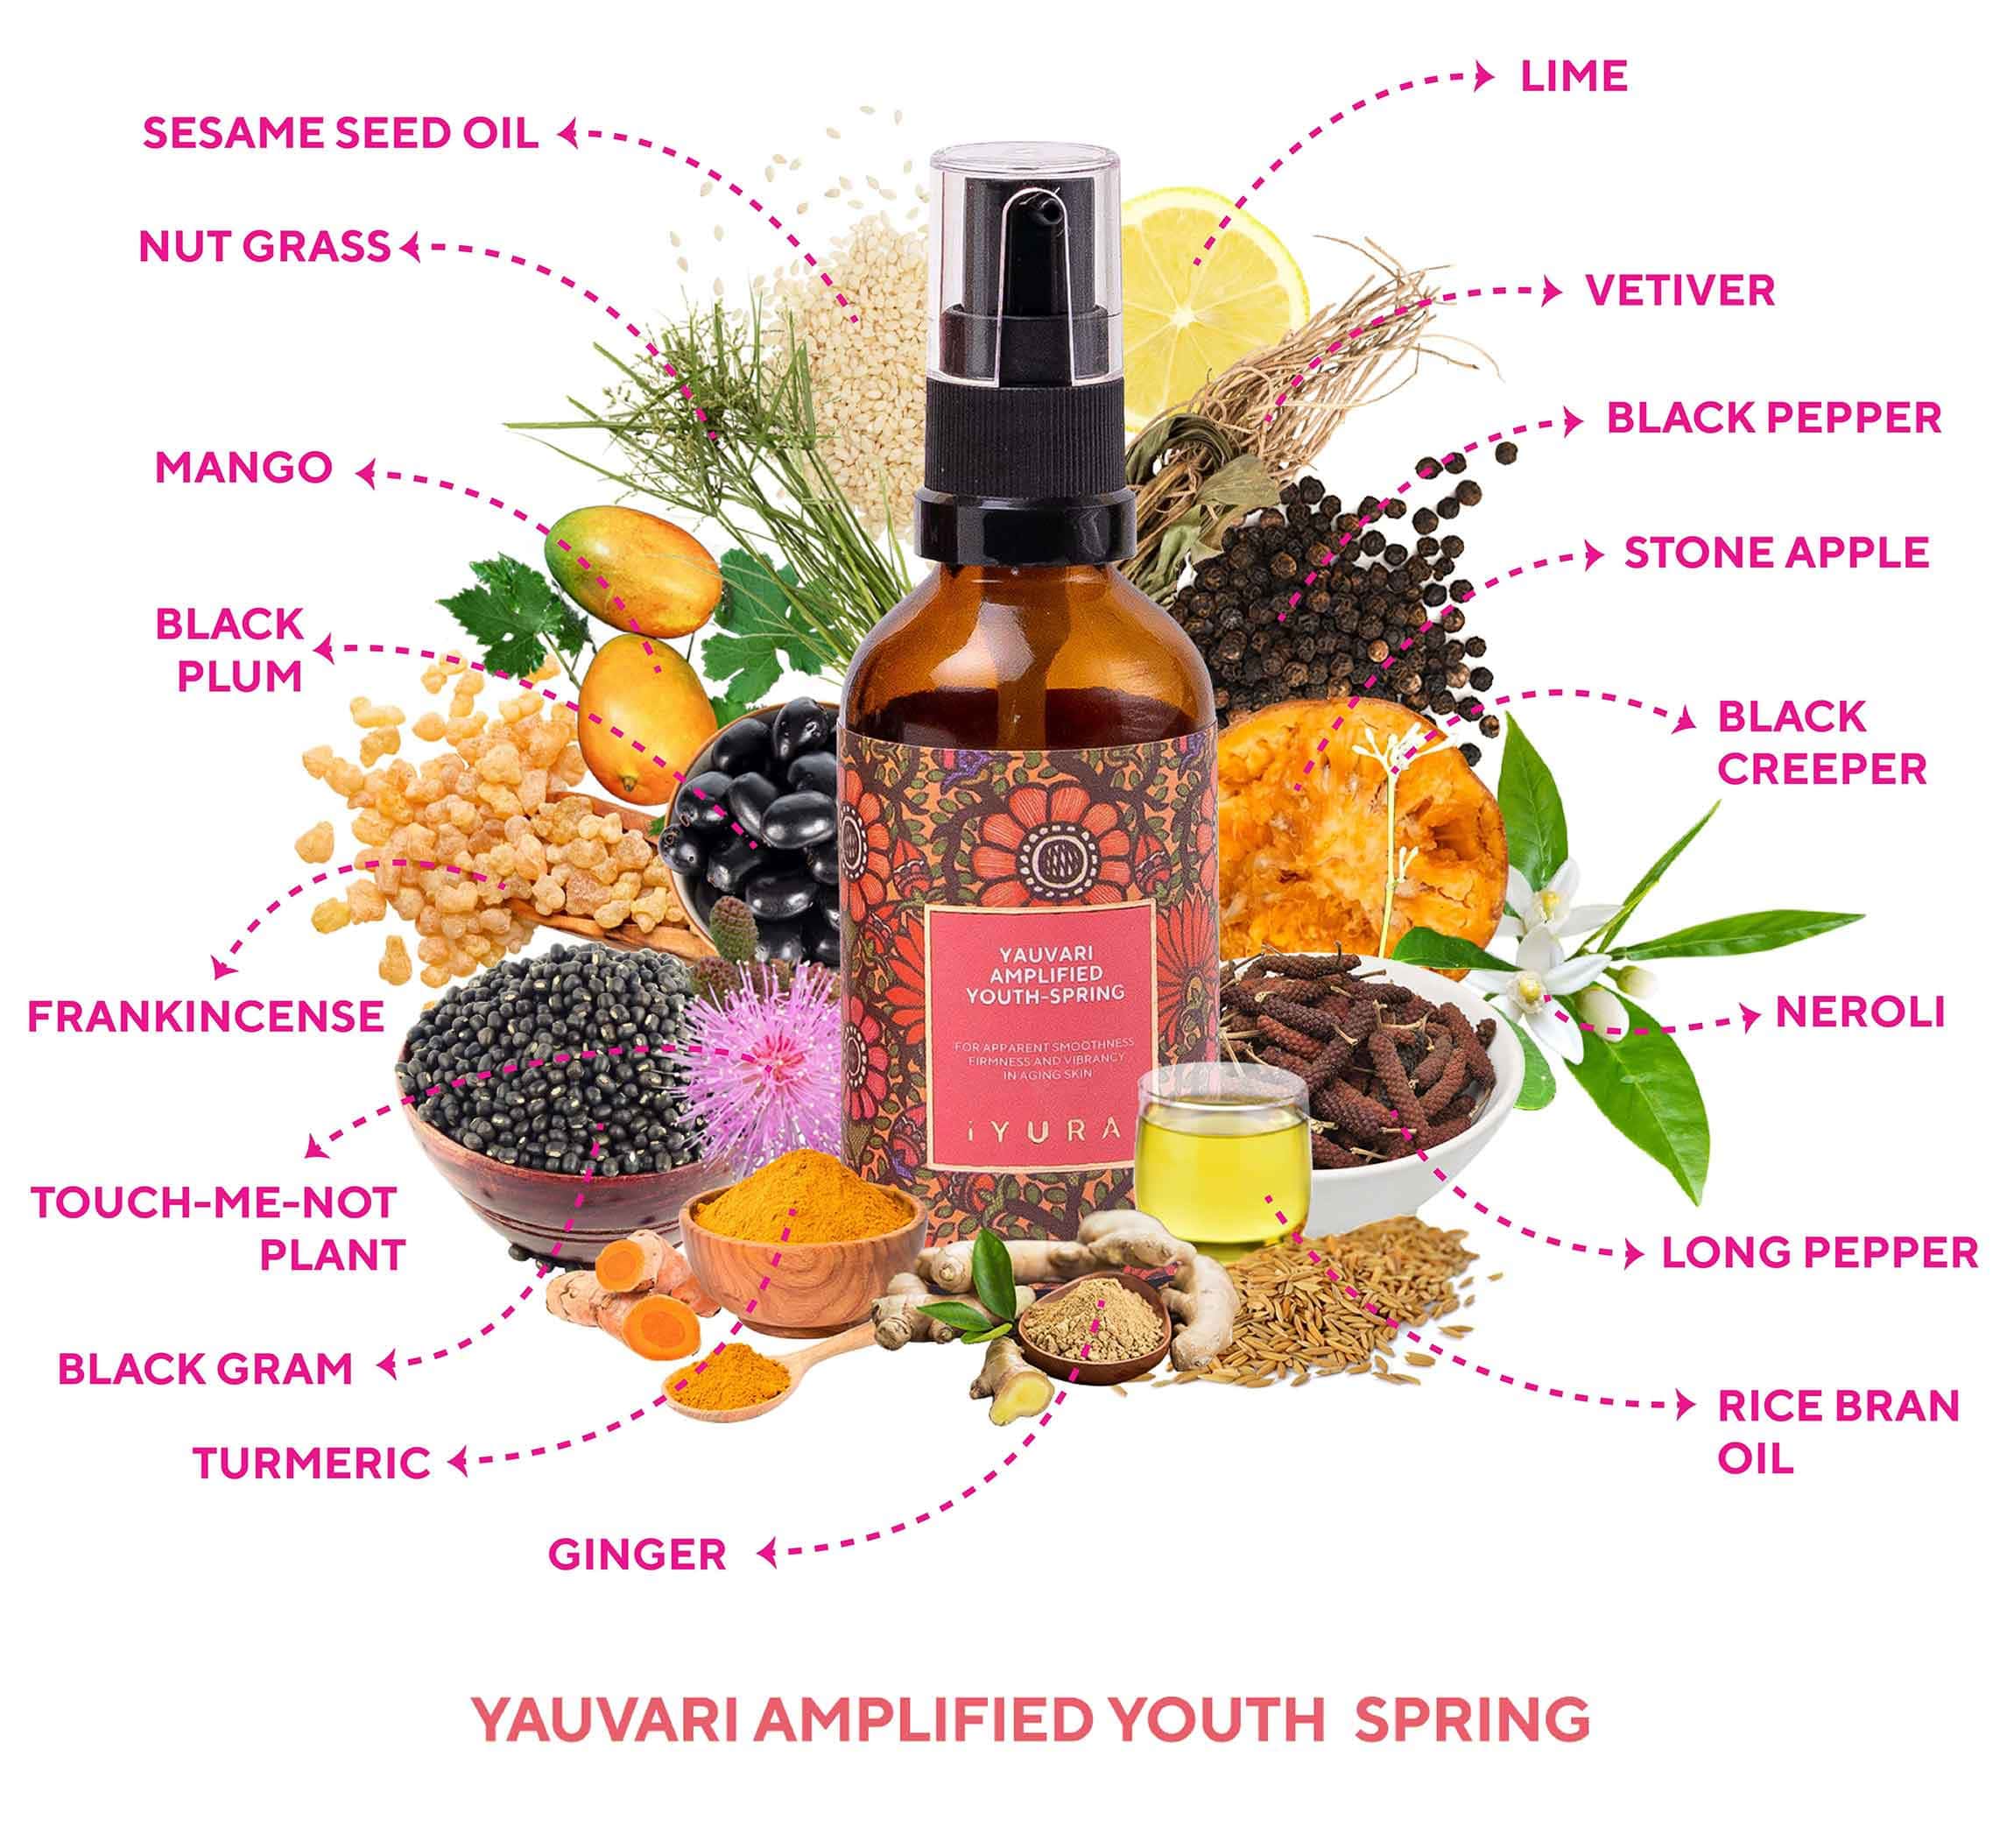 The ingredients of iYURA Yauvari Amplified Youth Spring